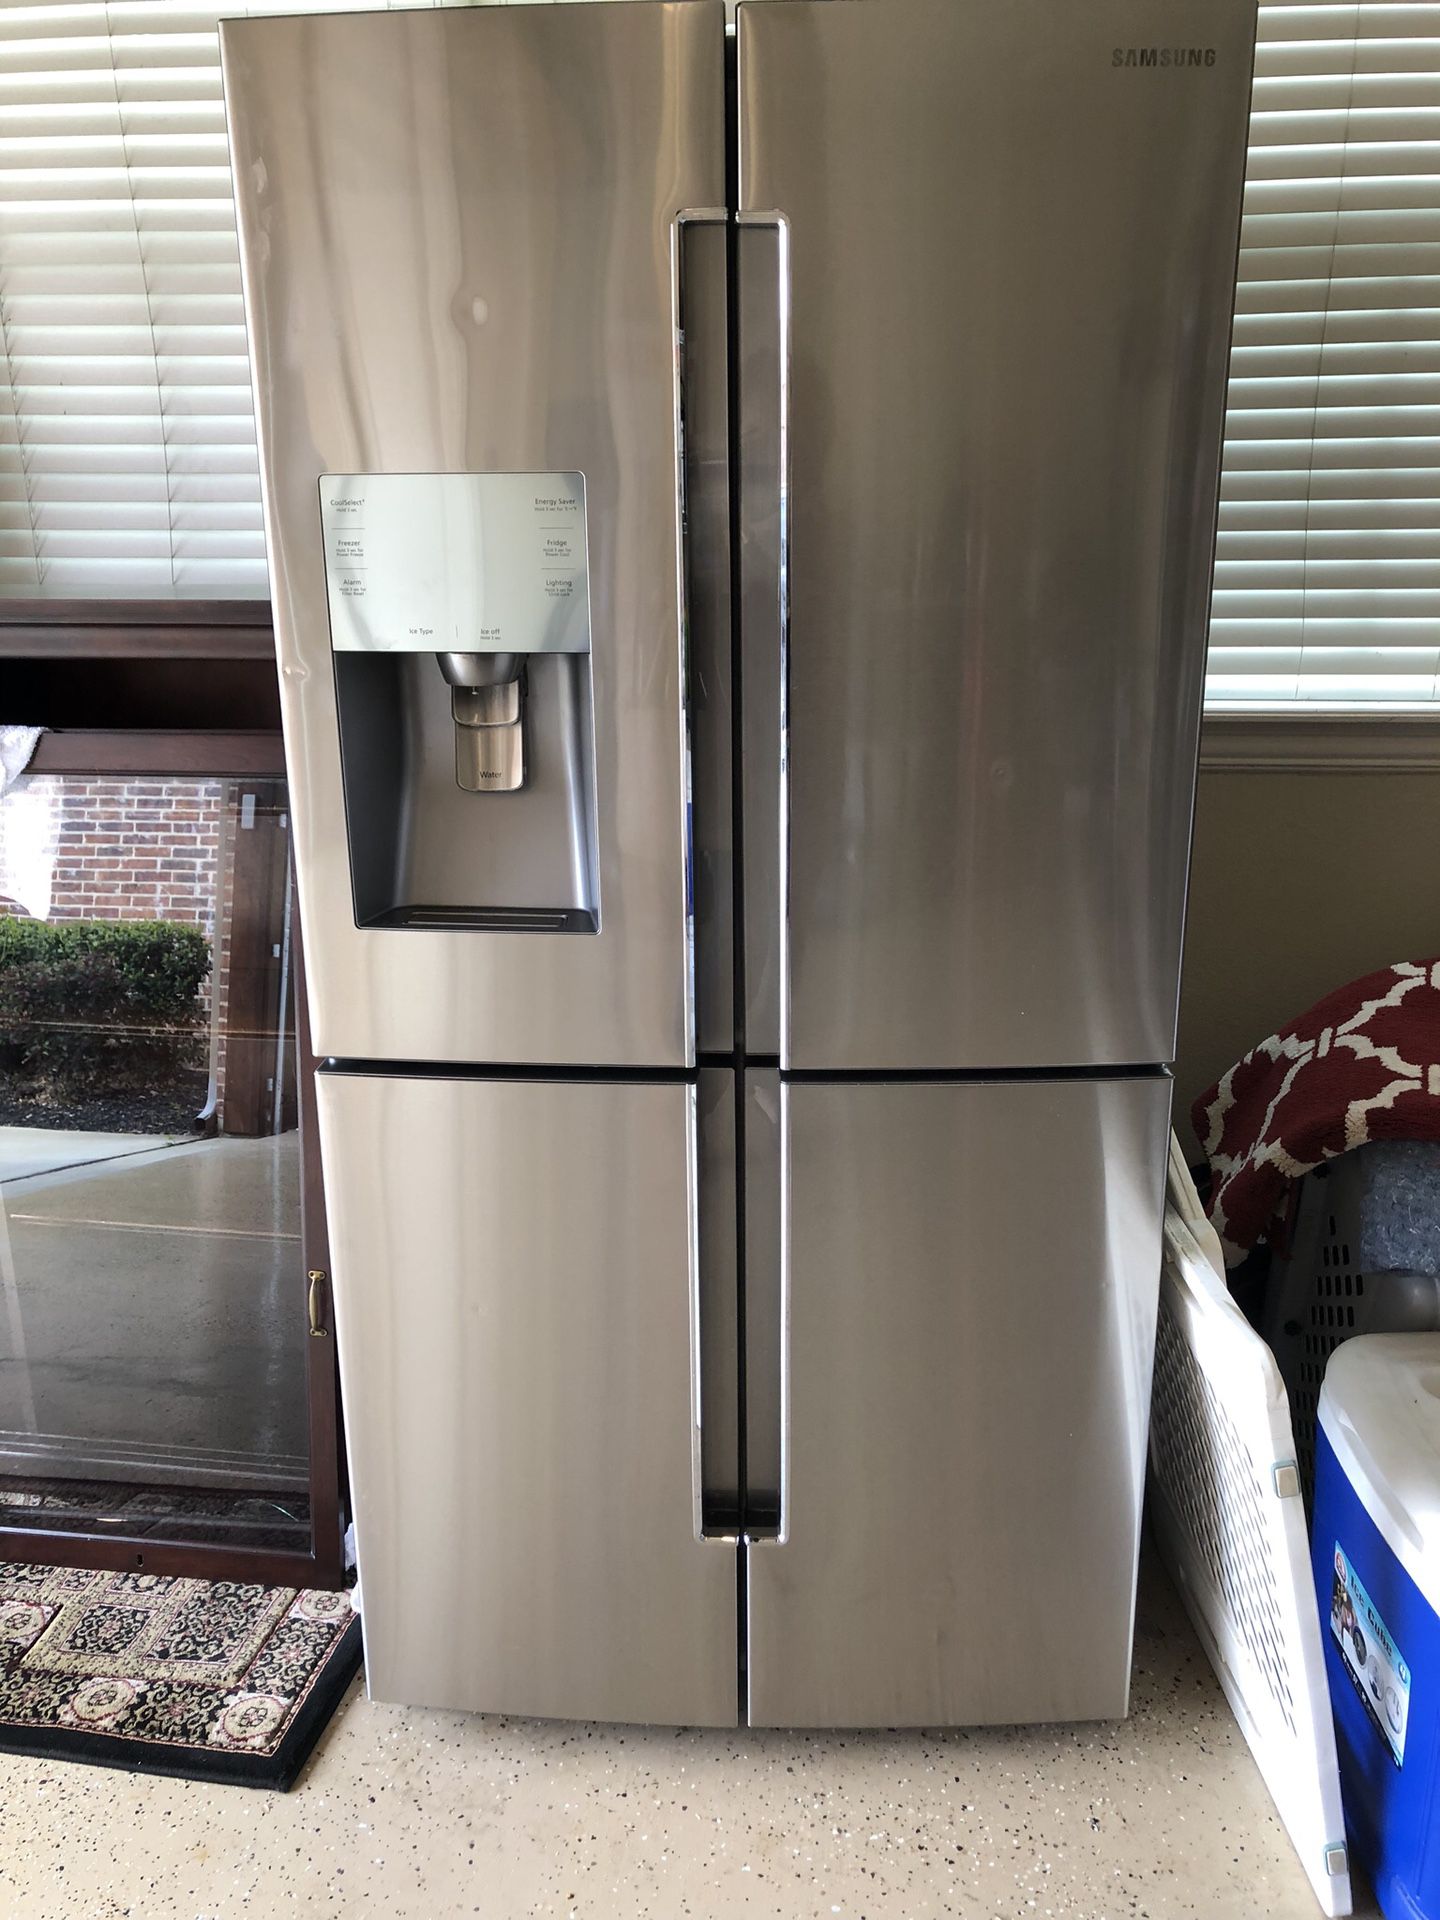 Samsung 29 cubic foot refrigerator freezer